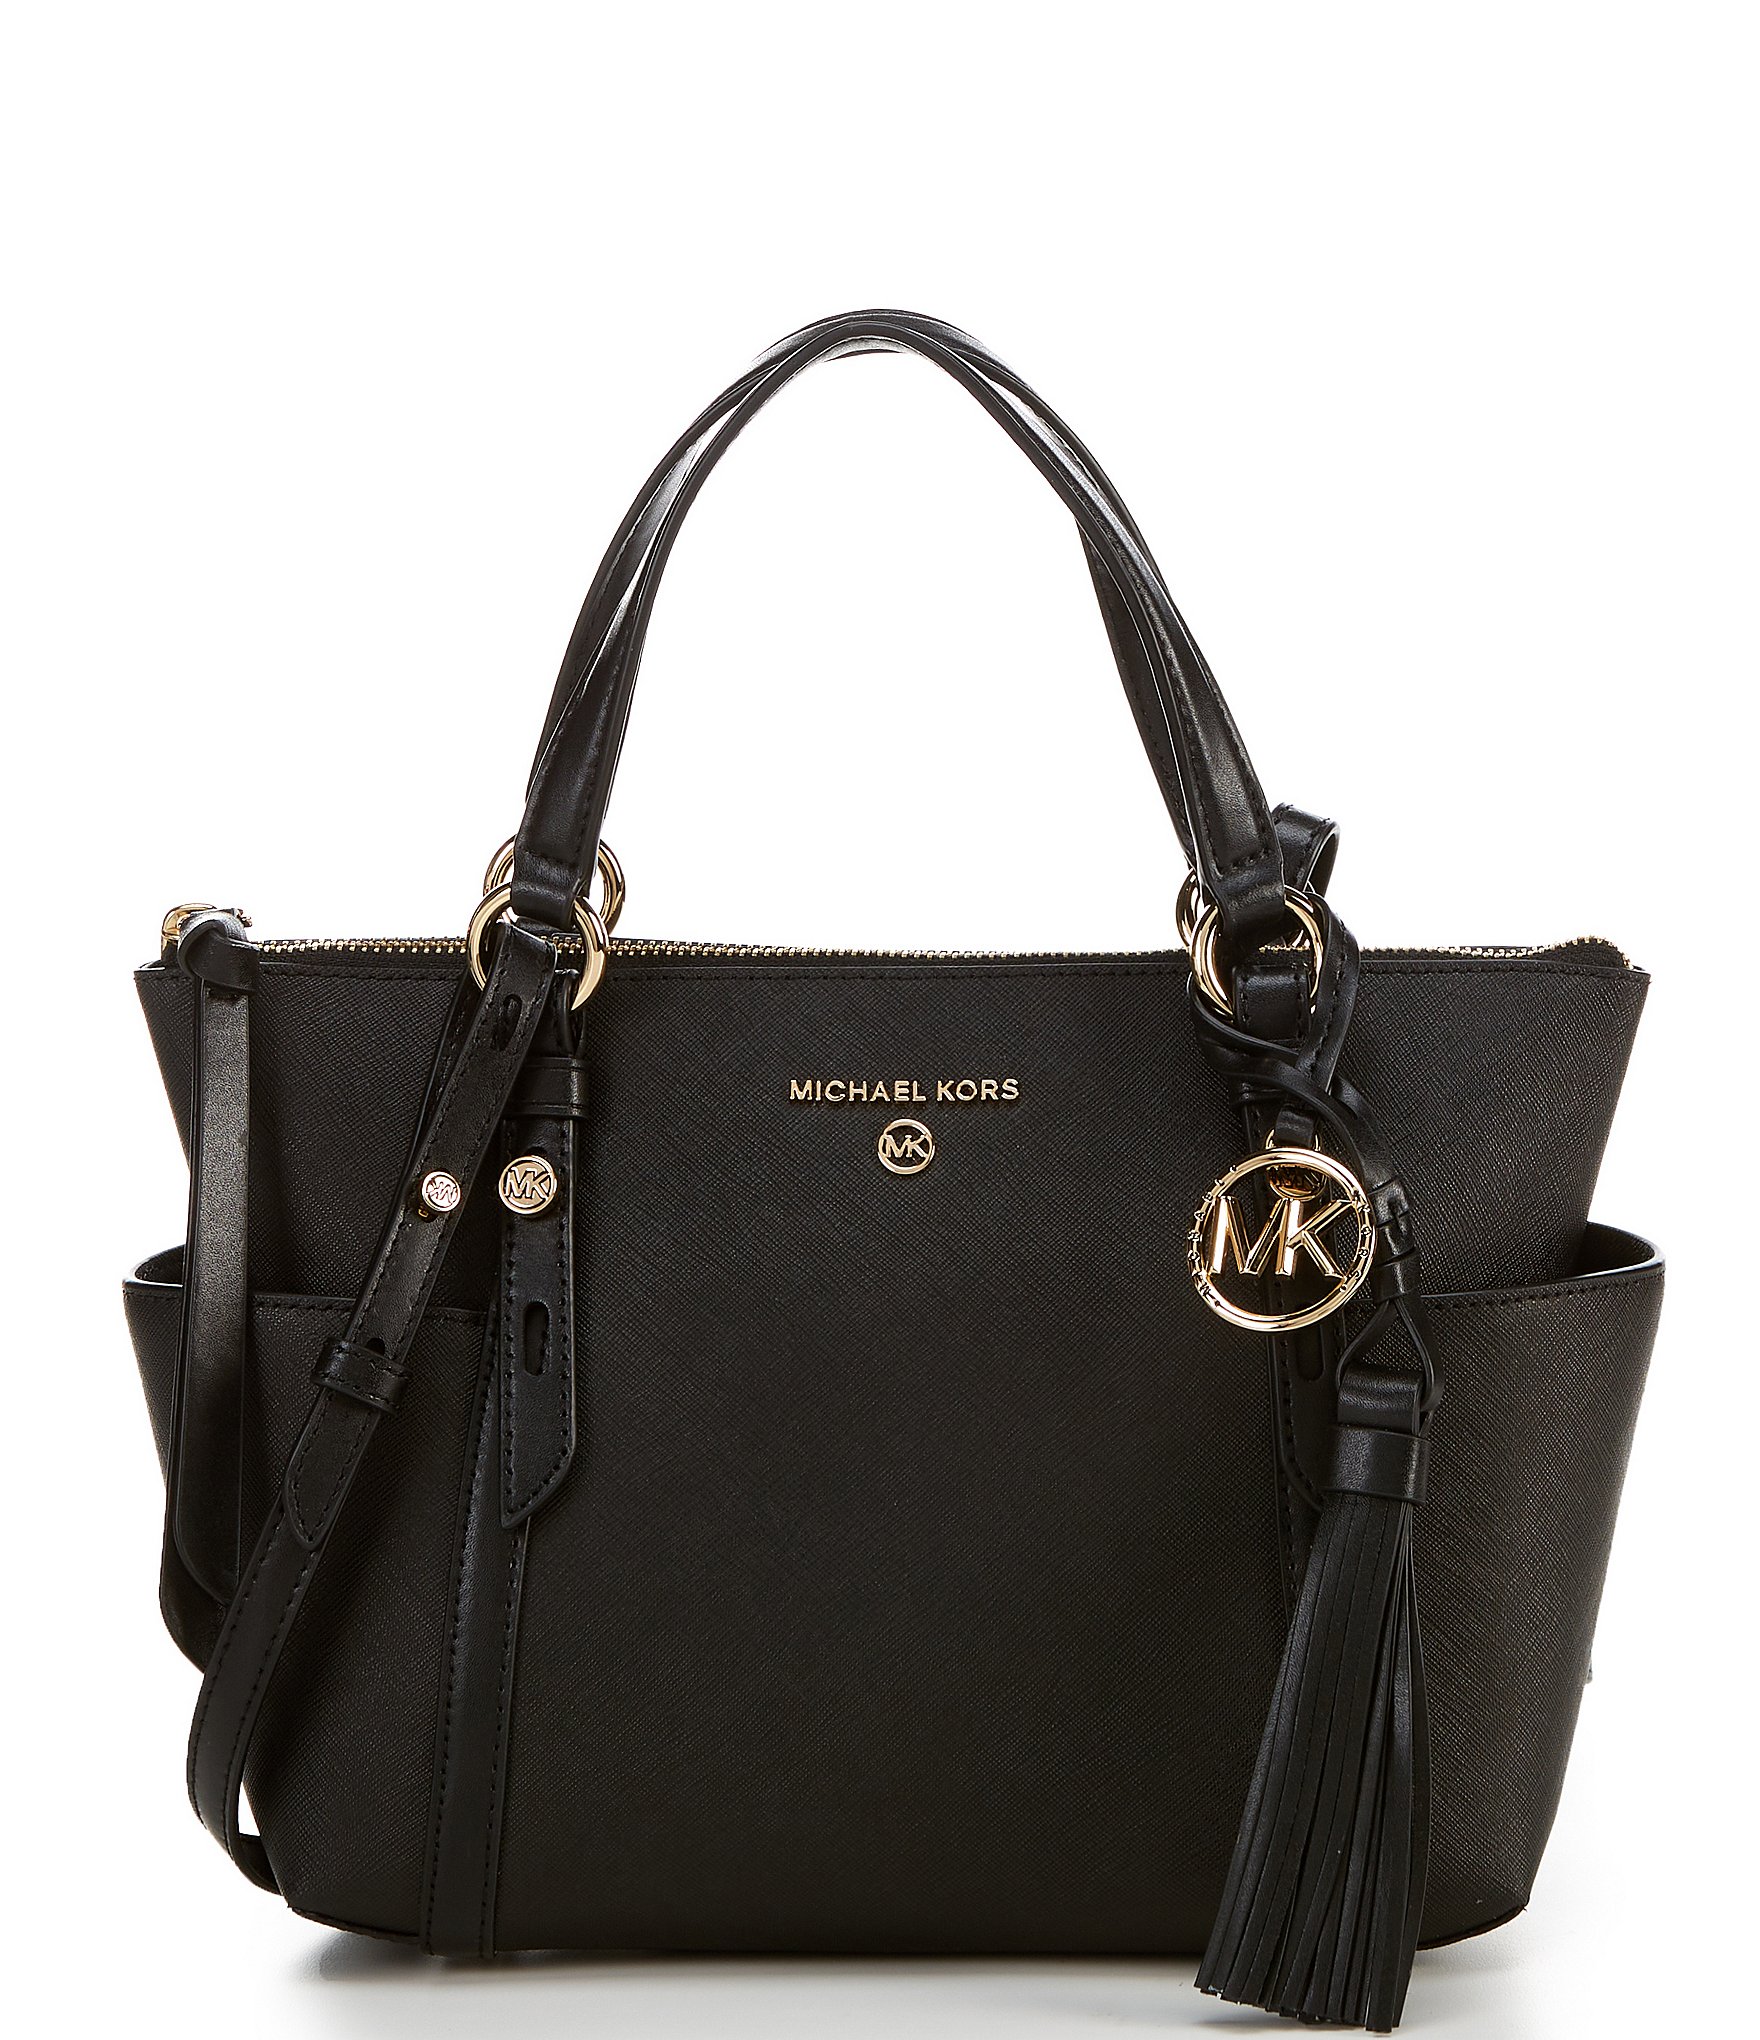 Amazon.com: Michael Kors Bag, Black : Clothing, Shoes & Jewelry